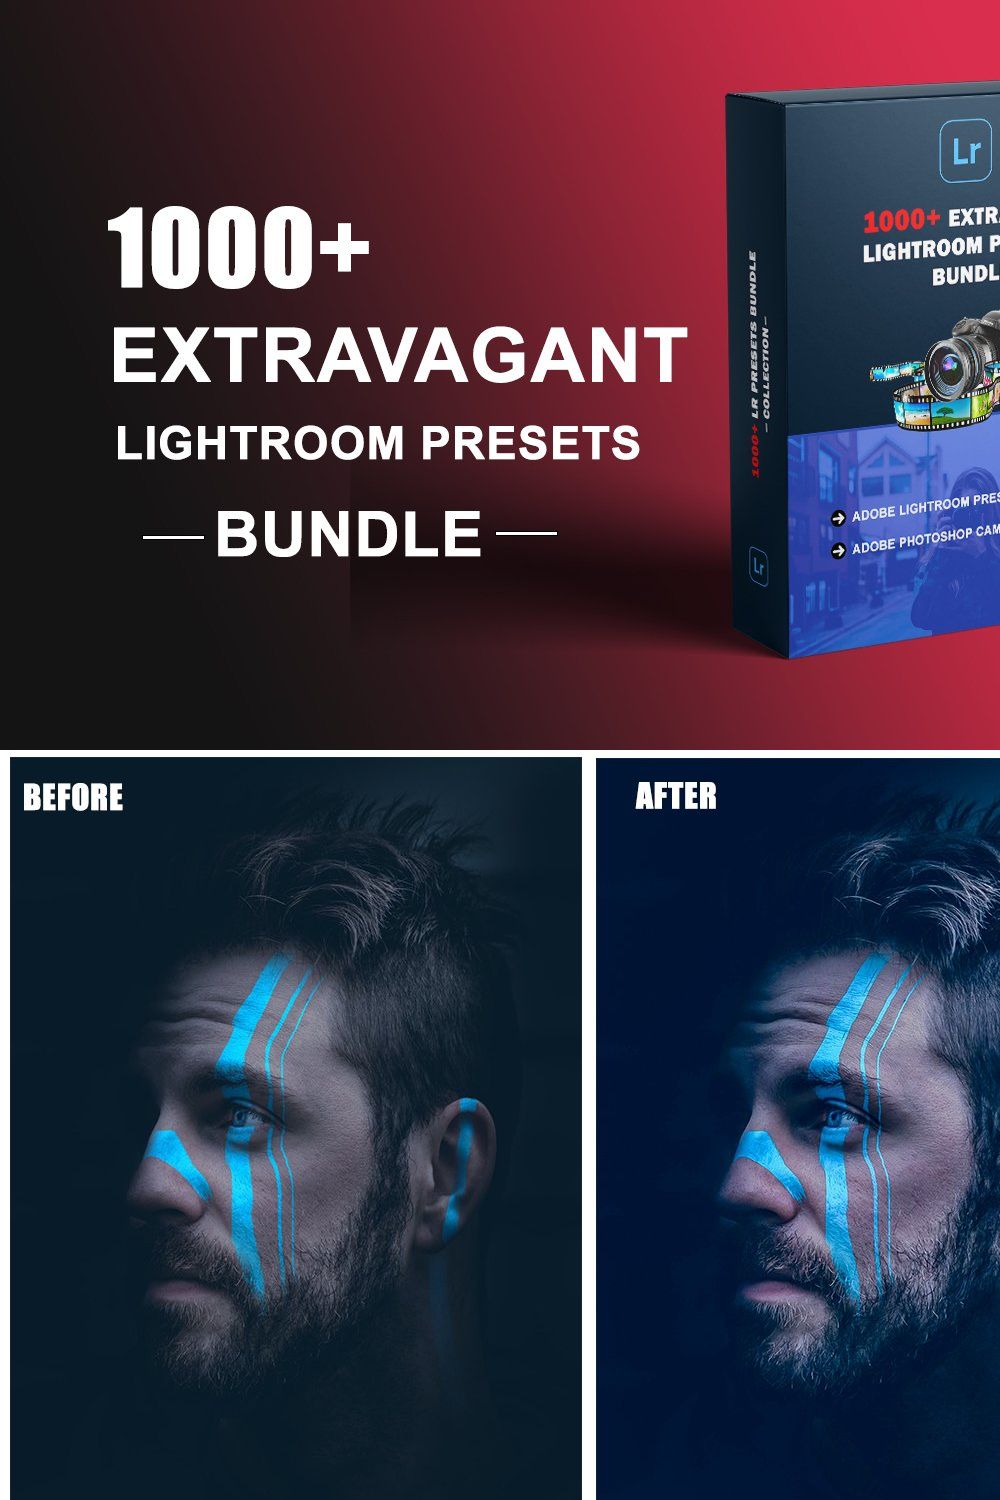 1000+ Extravagant Lightroom Preset pinterest preview image.